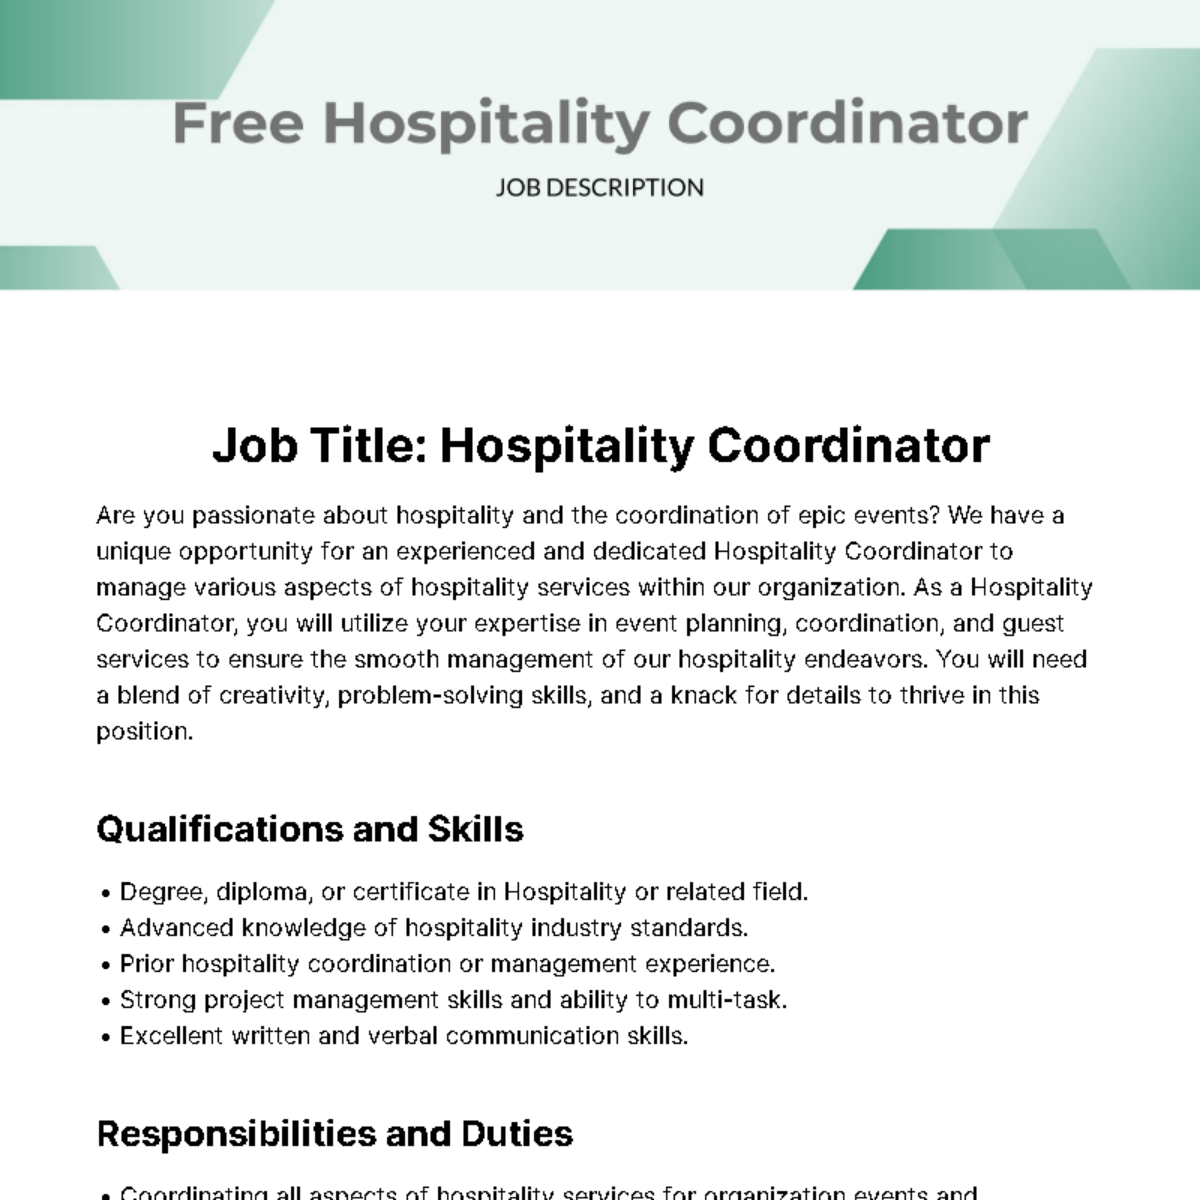 Free Hospitality Coordinator Job Description Template